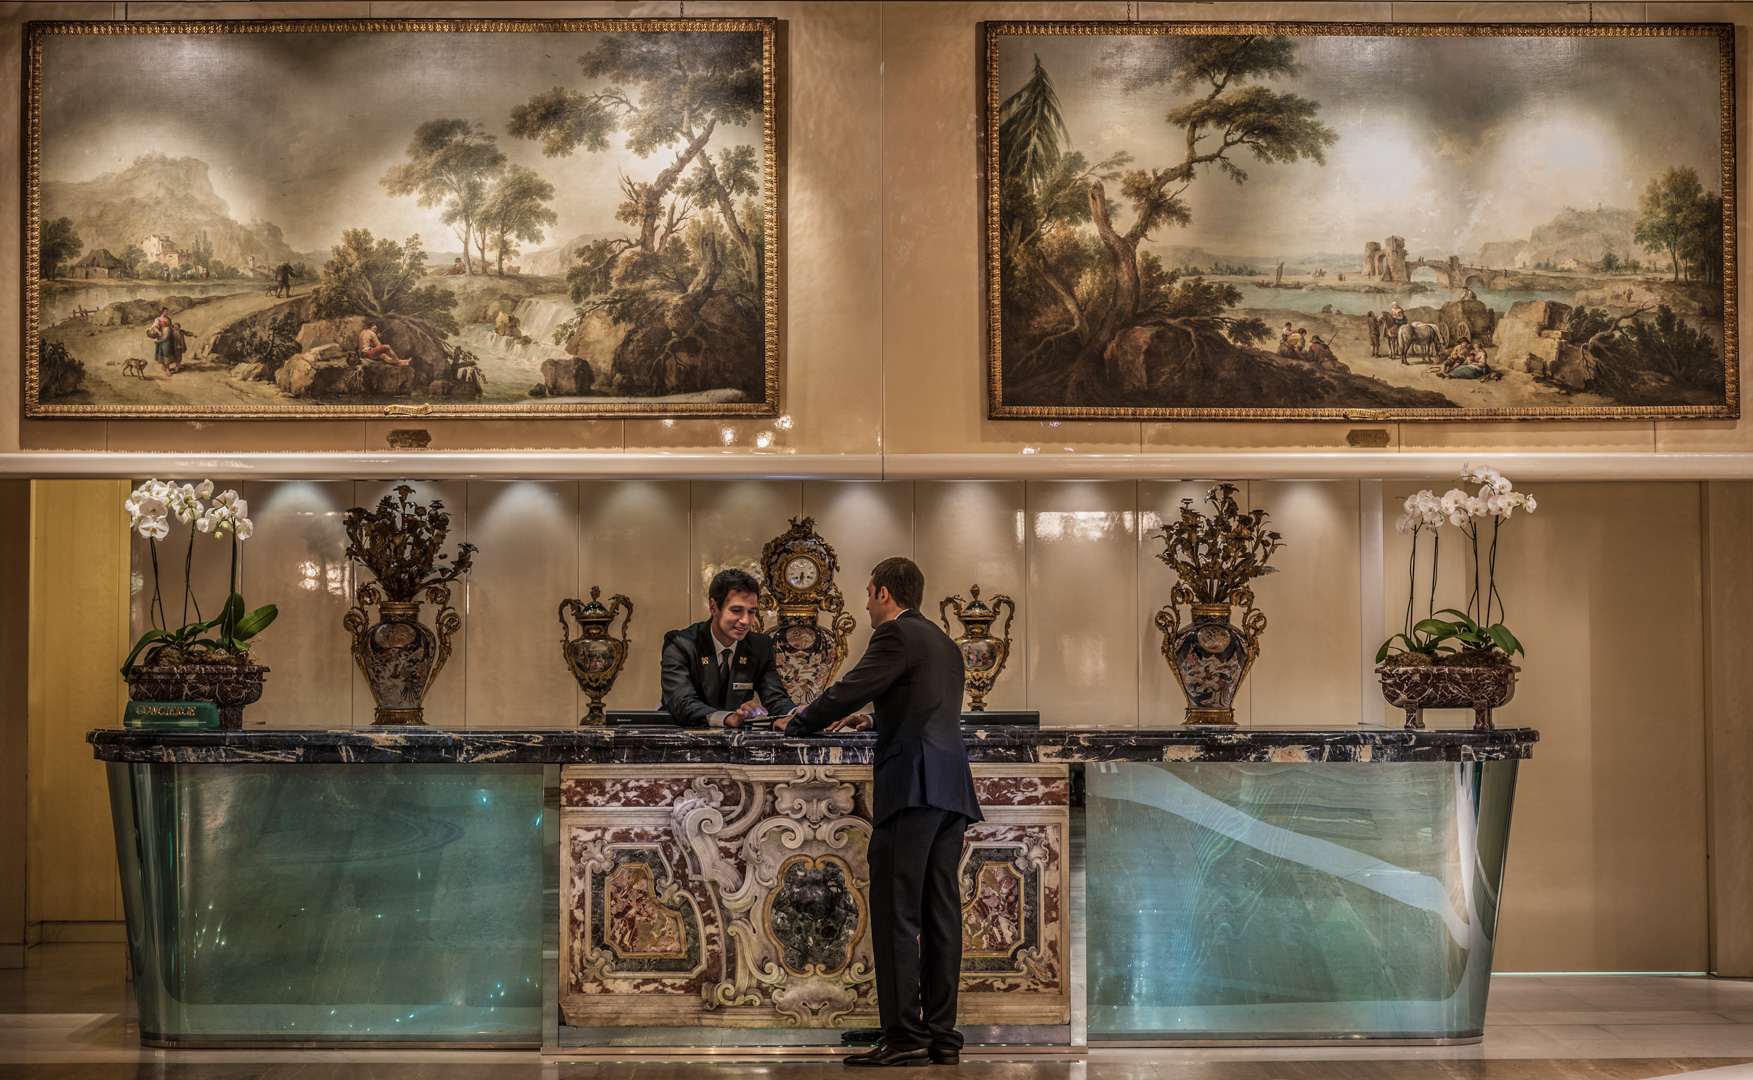 Rome Cavalieri Lobby Entrance - Concierge Desk with Zais Paintings